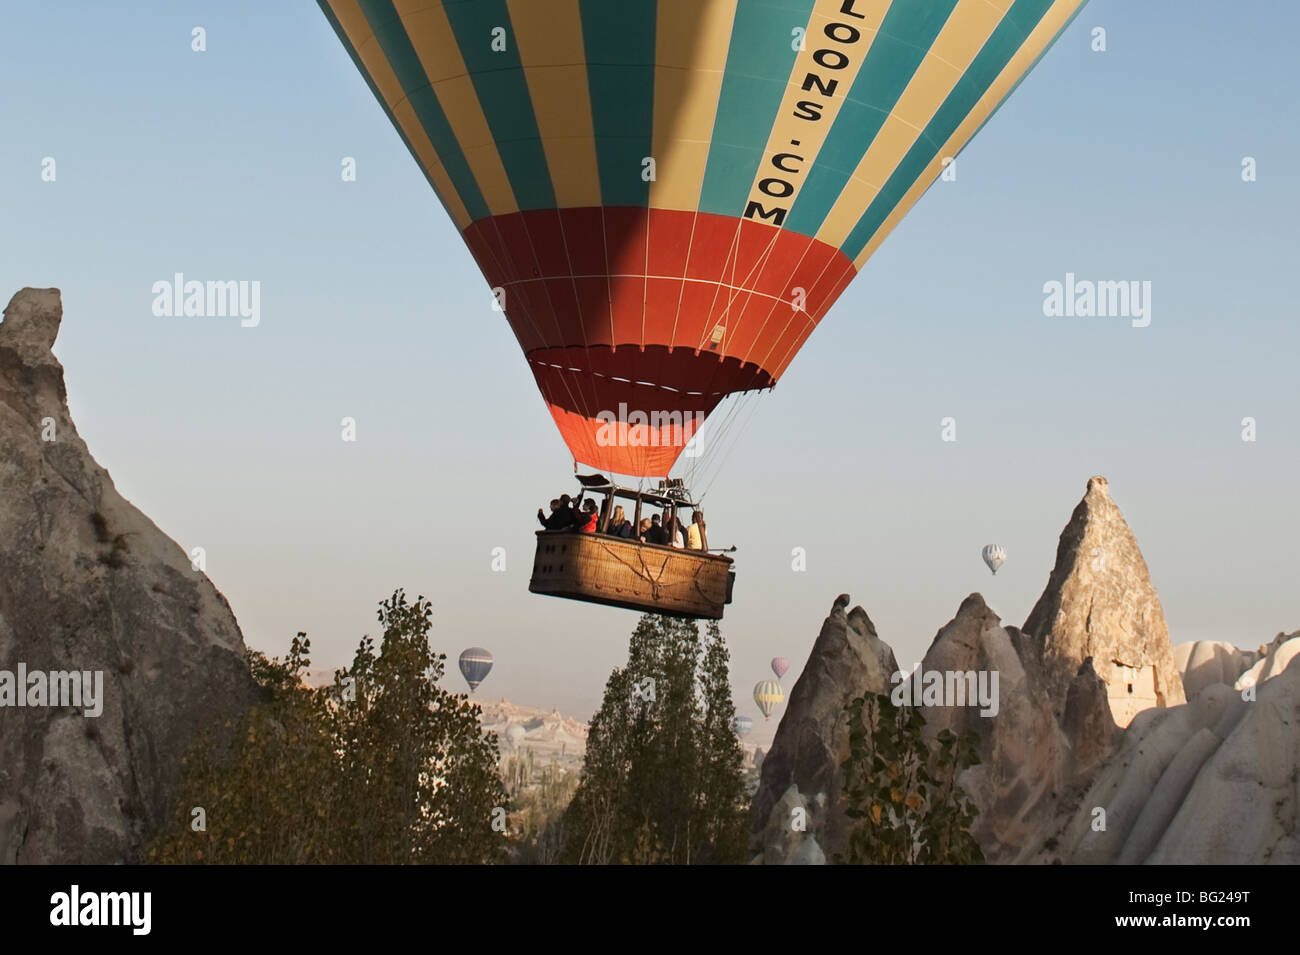 Hot air ballooning in Cappadocia, Nevsehir Province, Turkey with Kapadokya Balloons Stock Photo